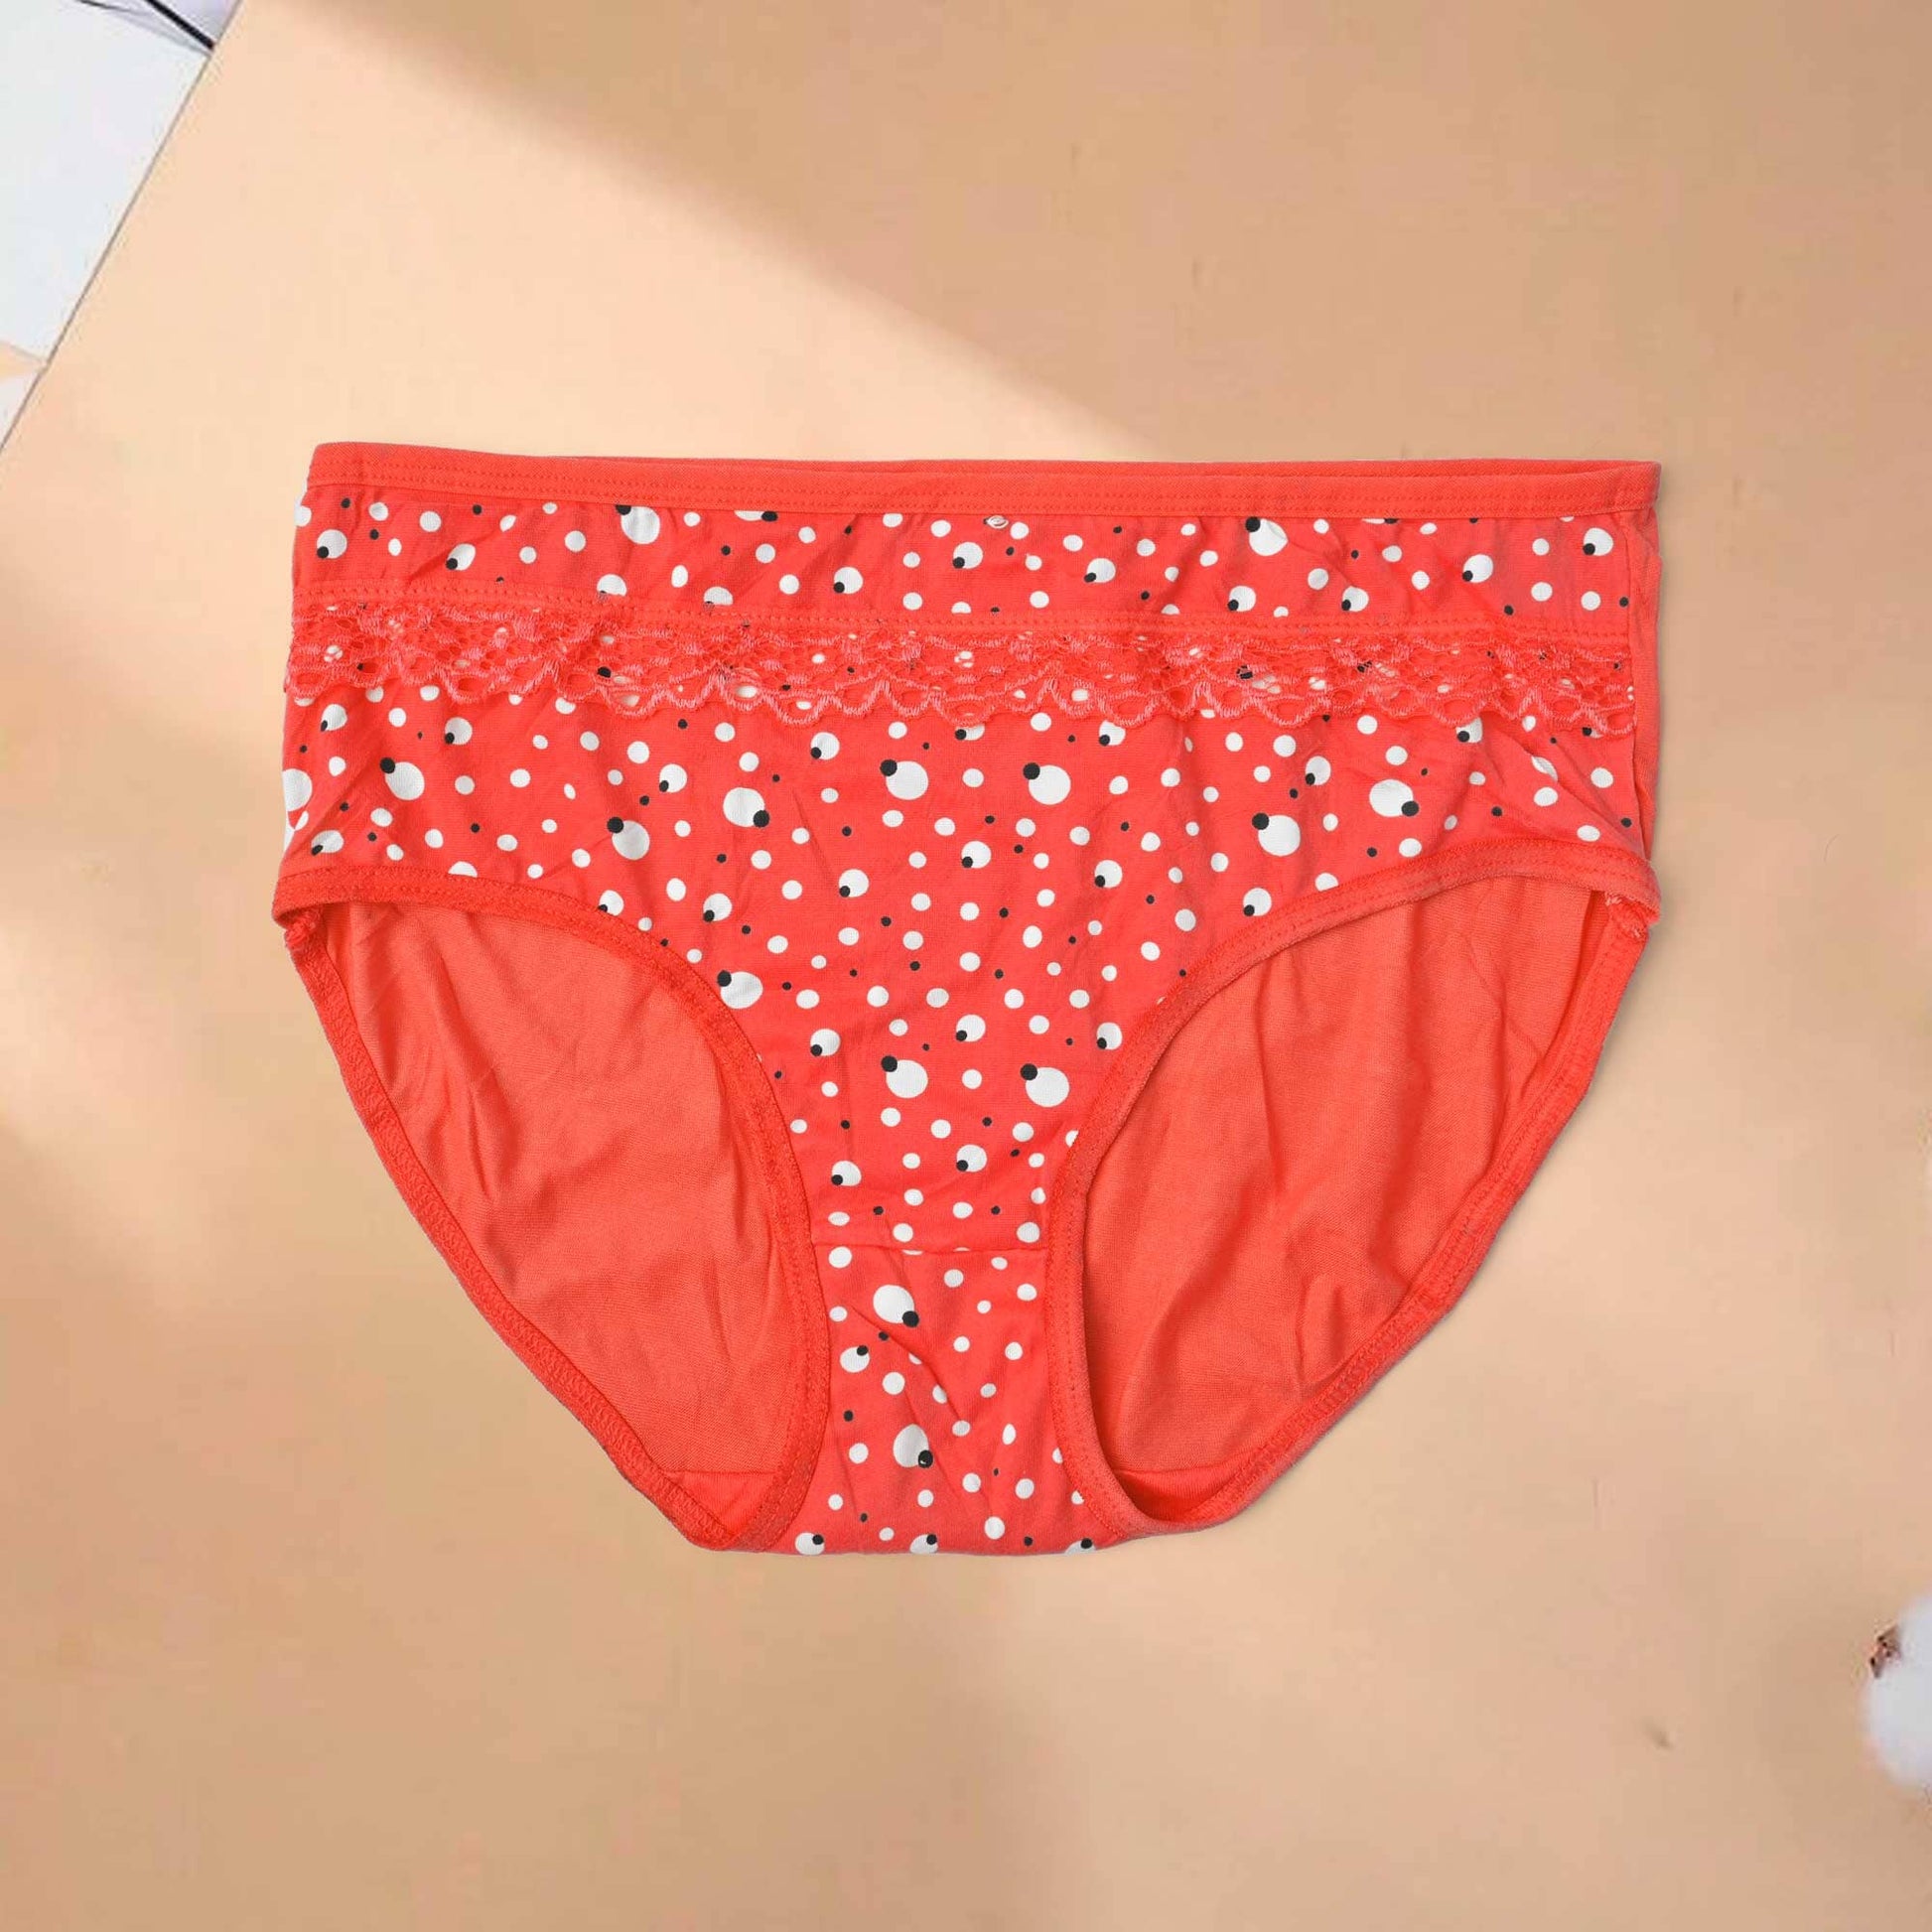 Custom printed women's underwear, Products